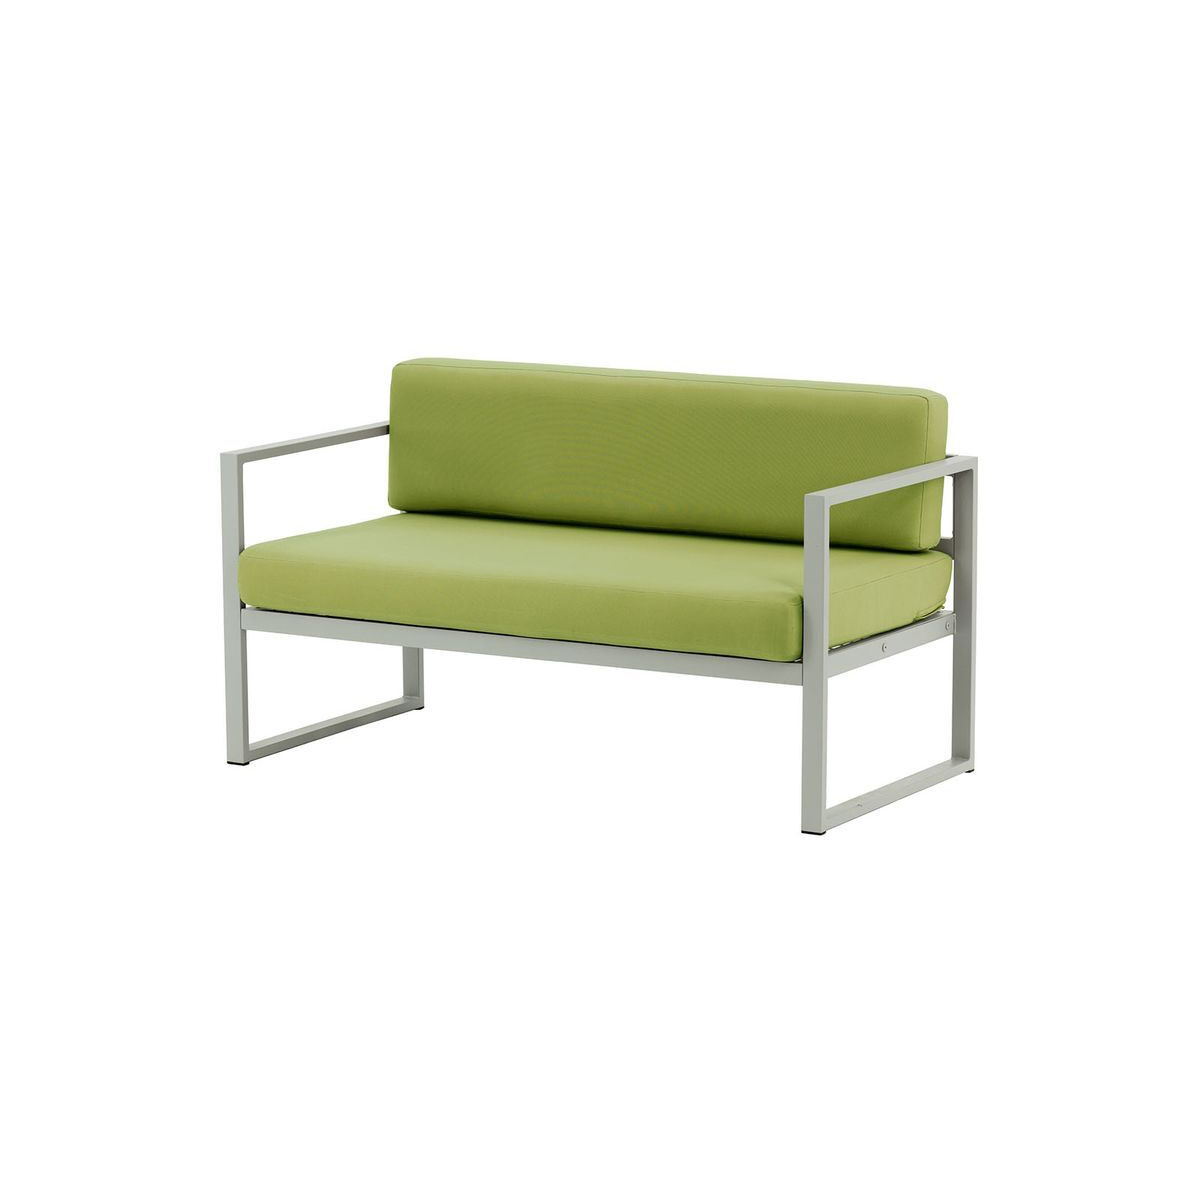 Sunset Garden 2 Seater Sofa, green, Leg colour: grey steel - image 1